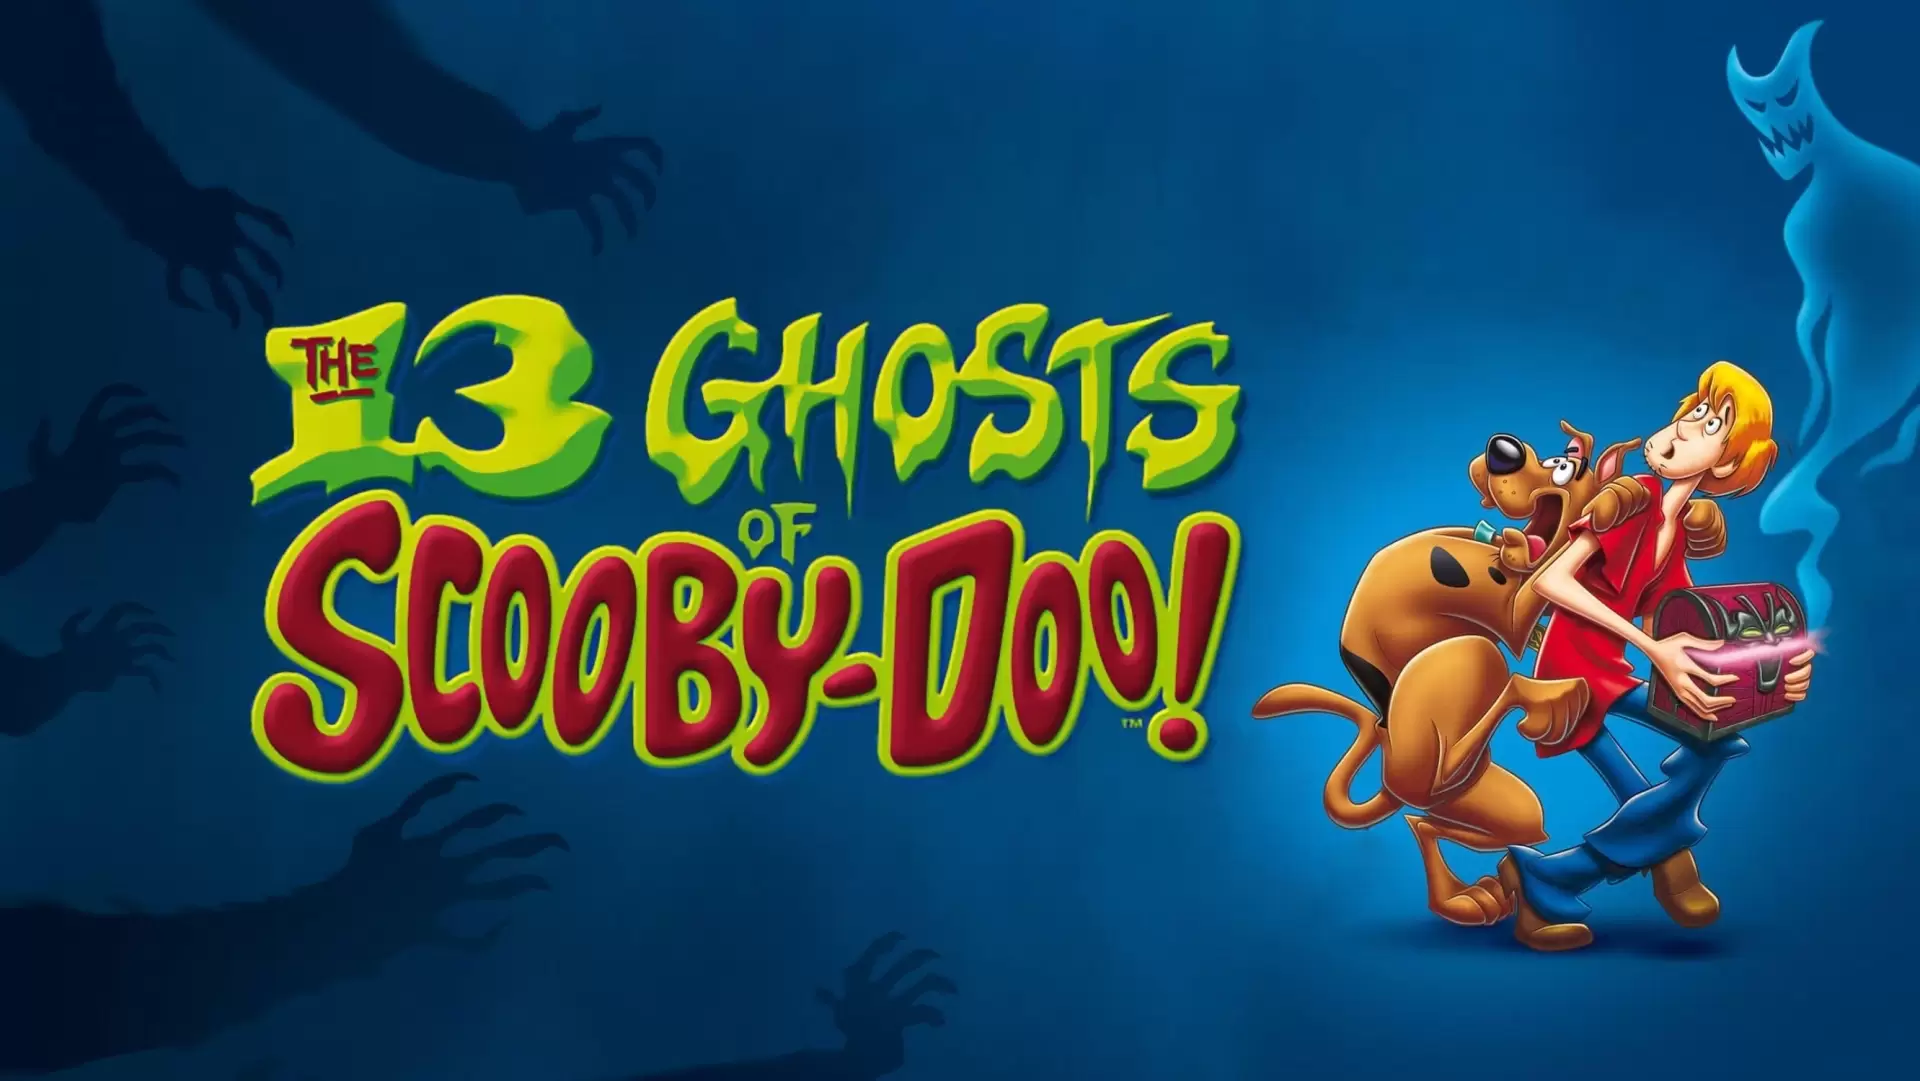 دانلود انیمیشن The 13 Ghosts of Scooby-Doo 1985 (سیزده روح اسکوبی دو)